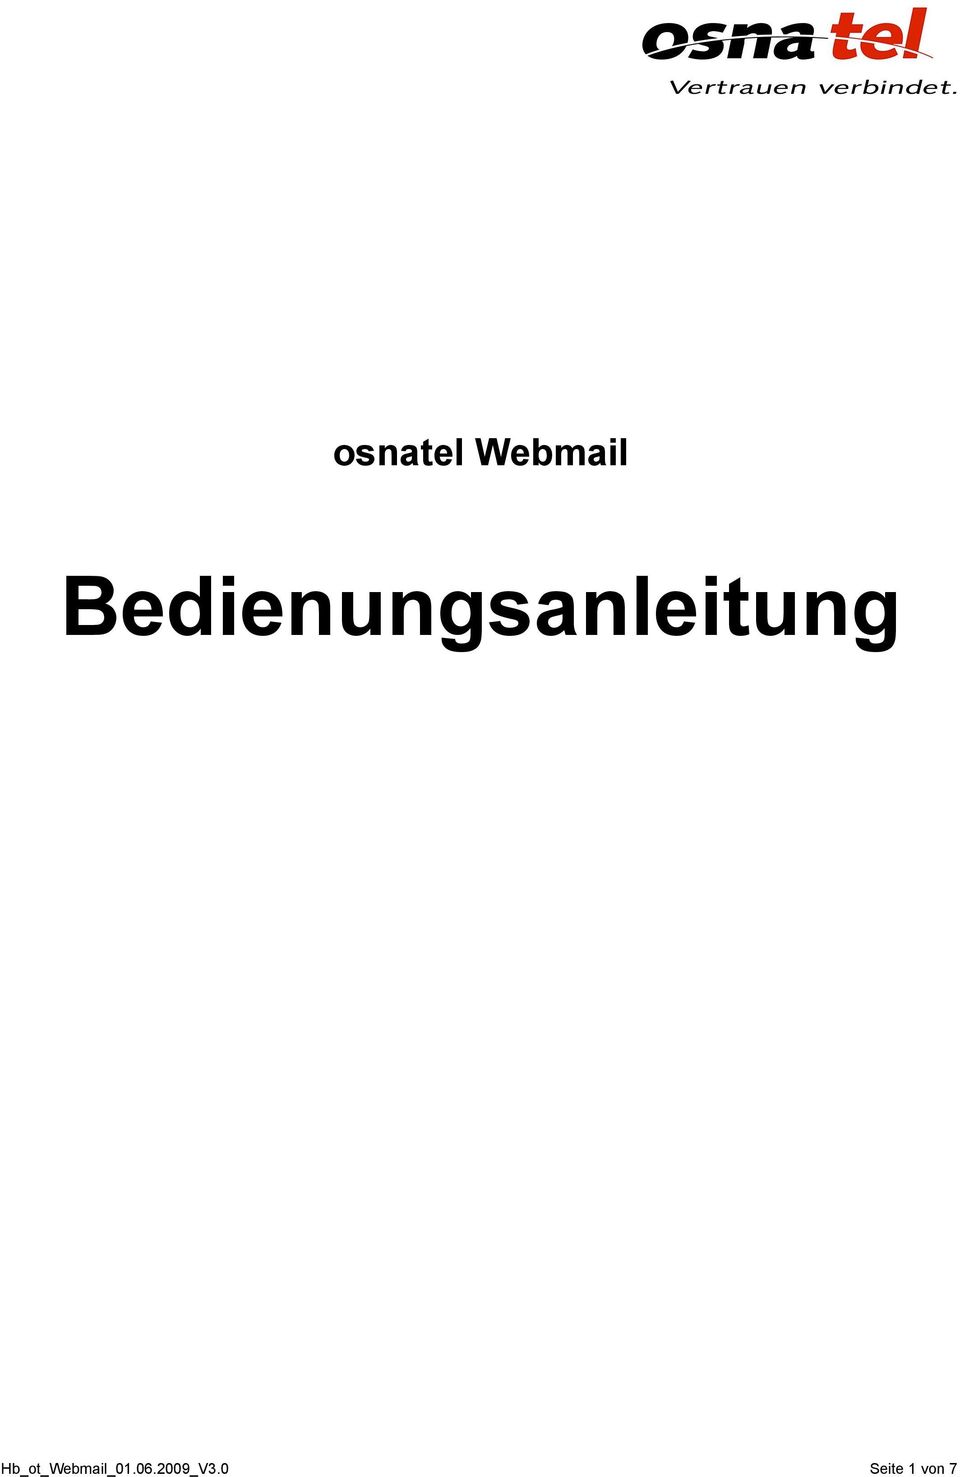 Hb_ot_Webmail_01.06.